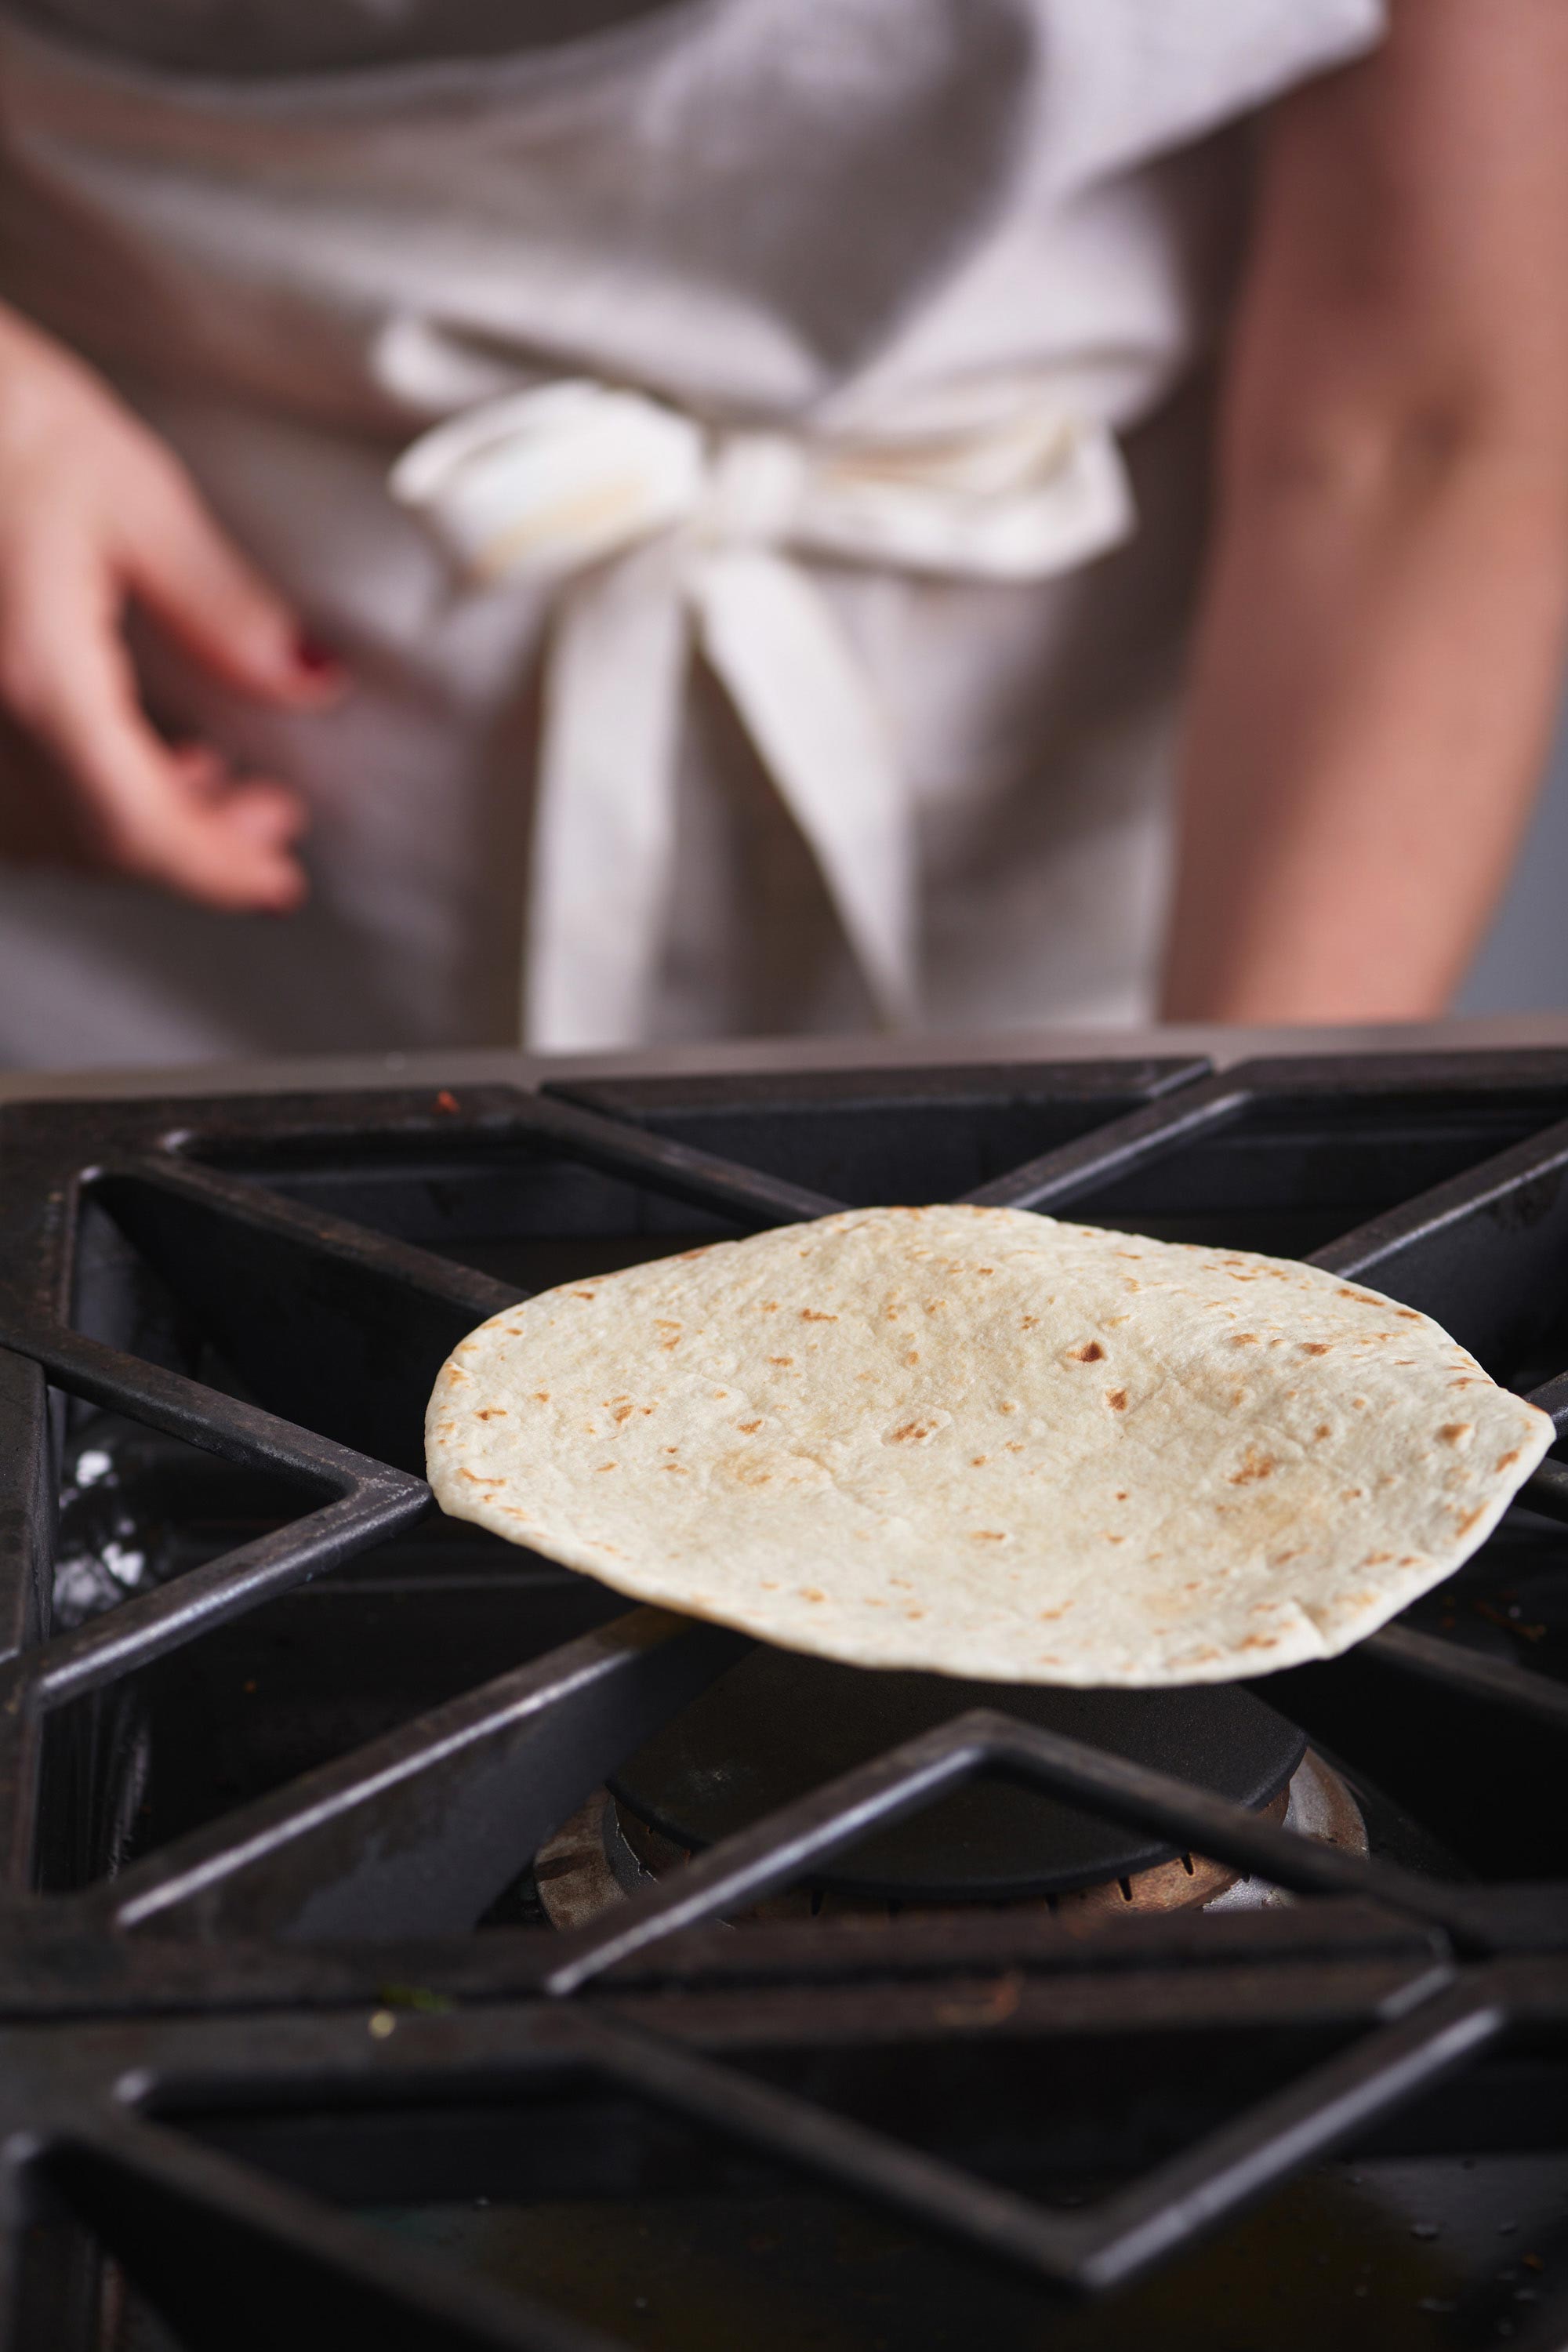 My Favorite Way to Heat Up Tortillas